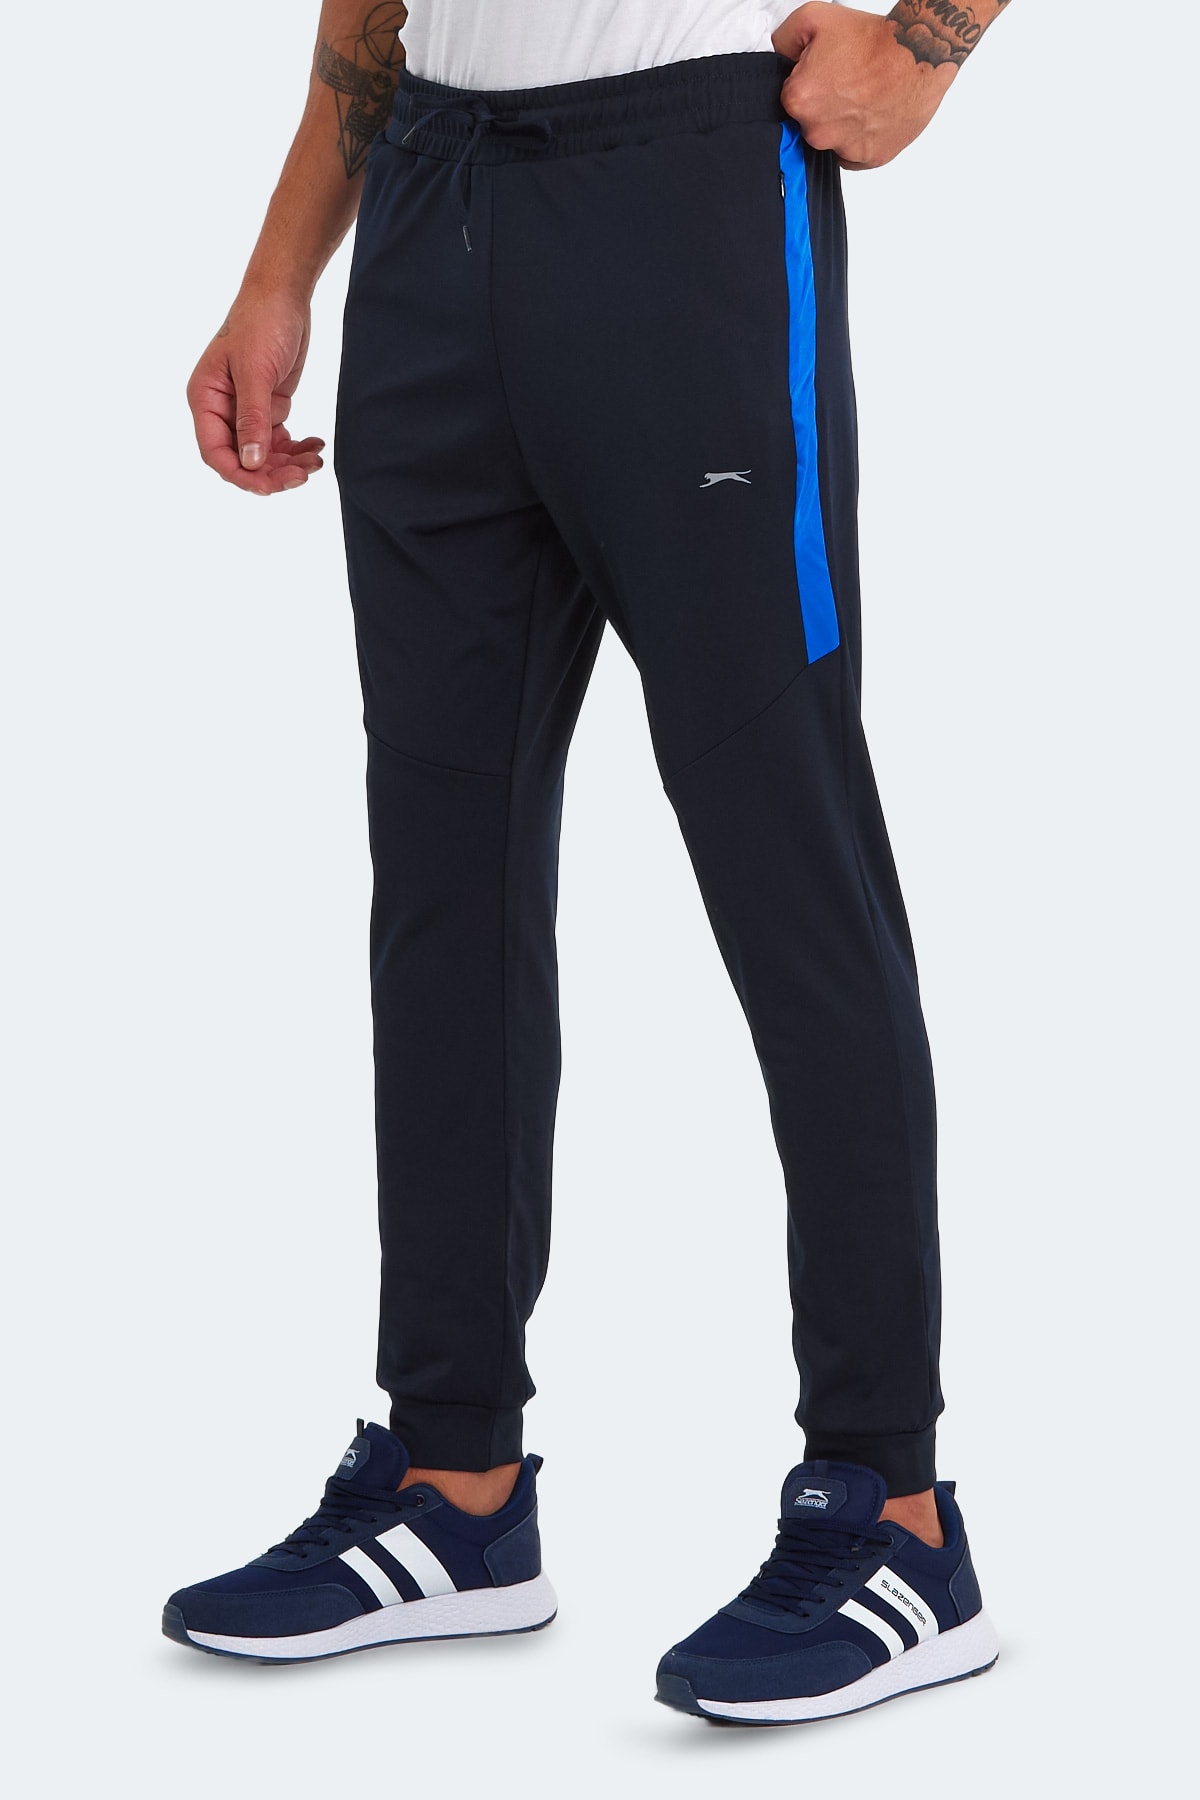 Slazenger Men's Sweatpants Navy Blue